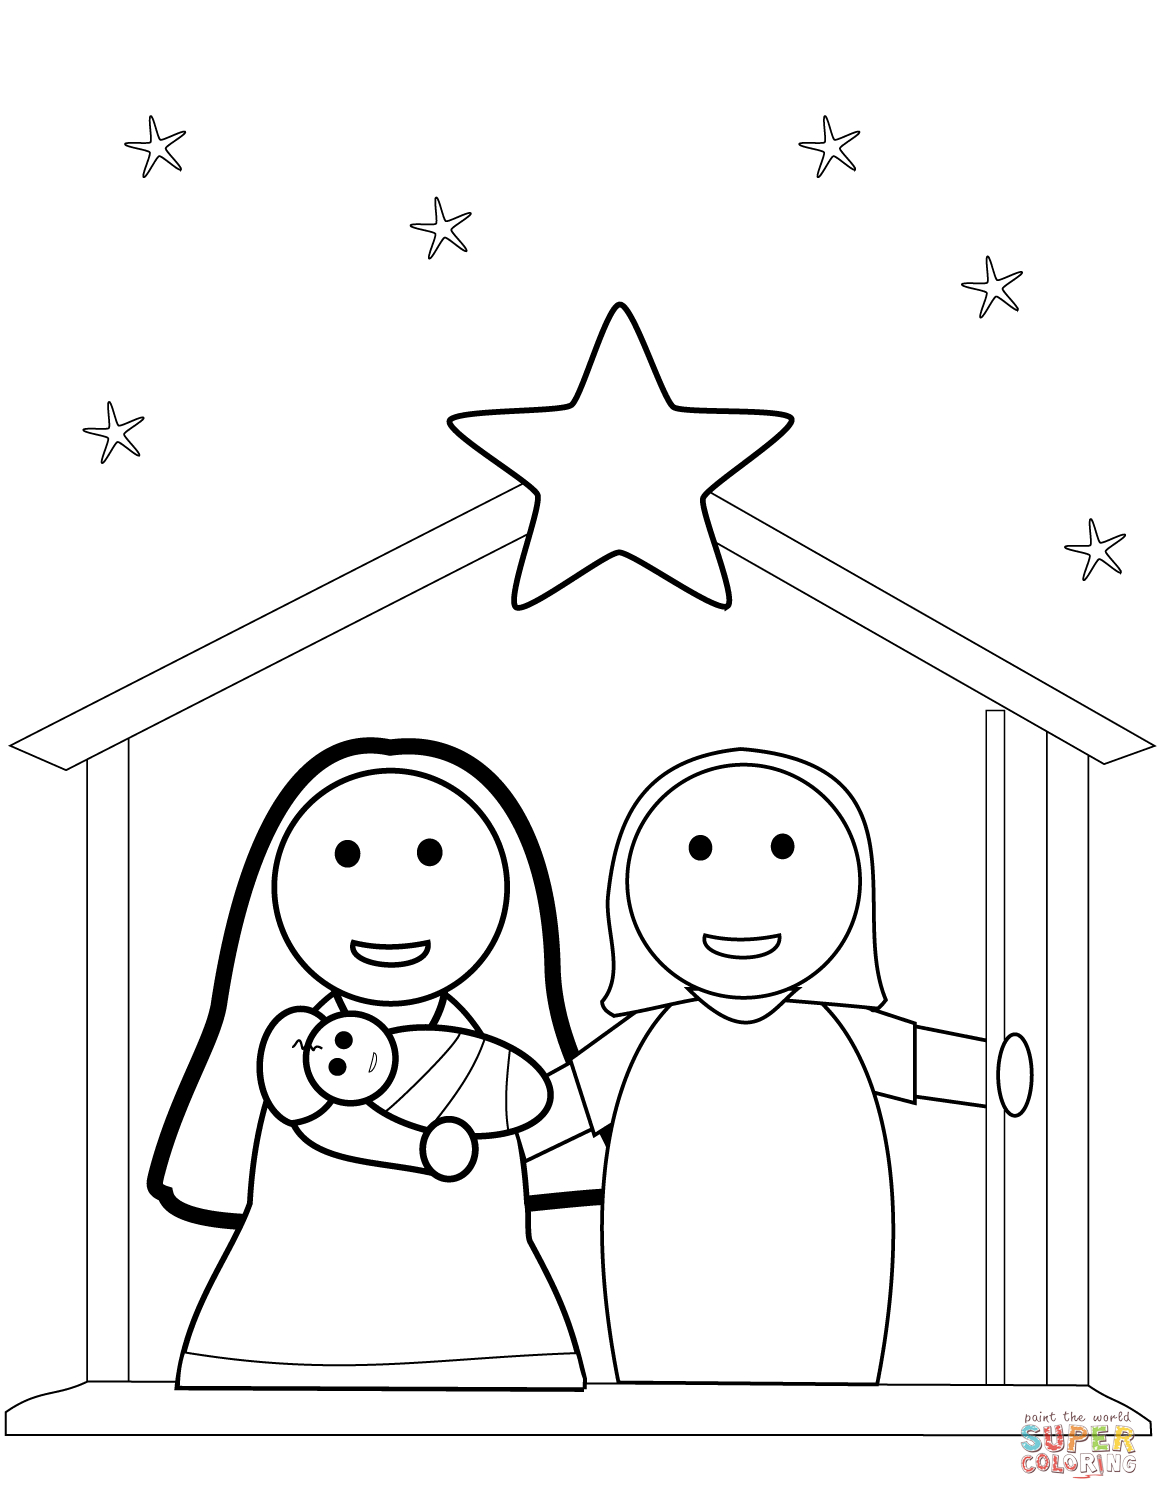 Christmas Nativity Scene Coloring Page | Free Printable Coloring Pages - Free Printable Pictures Of Nativity Scenes